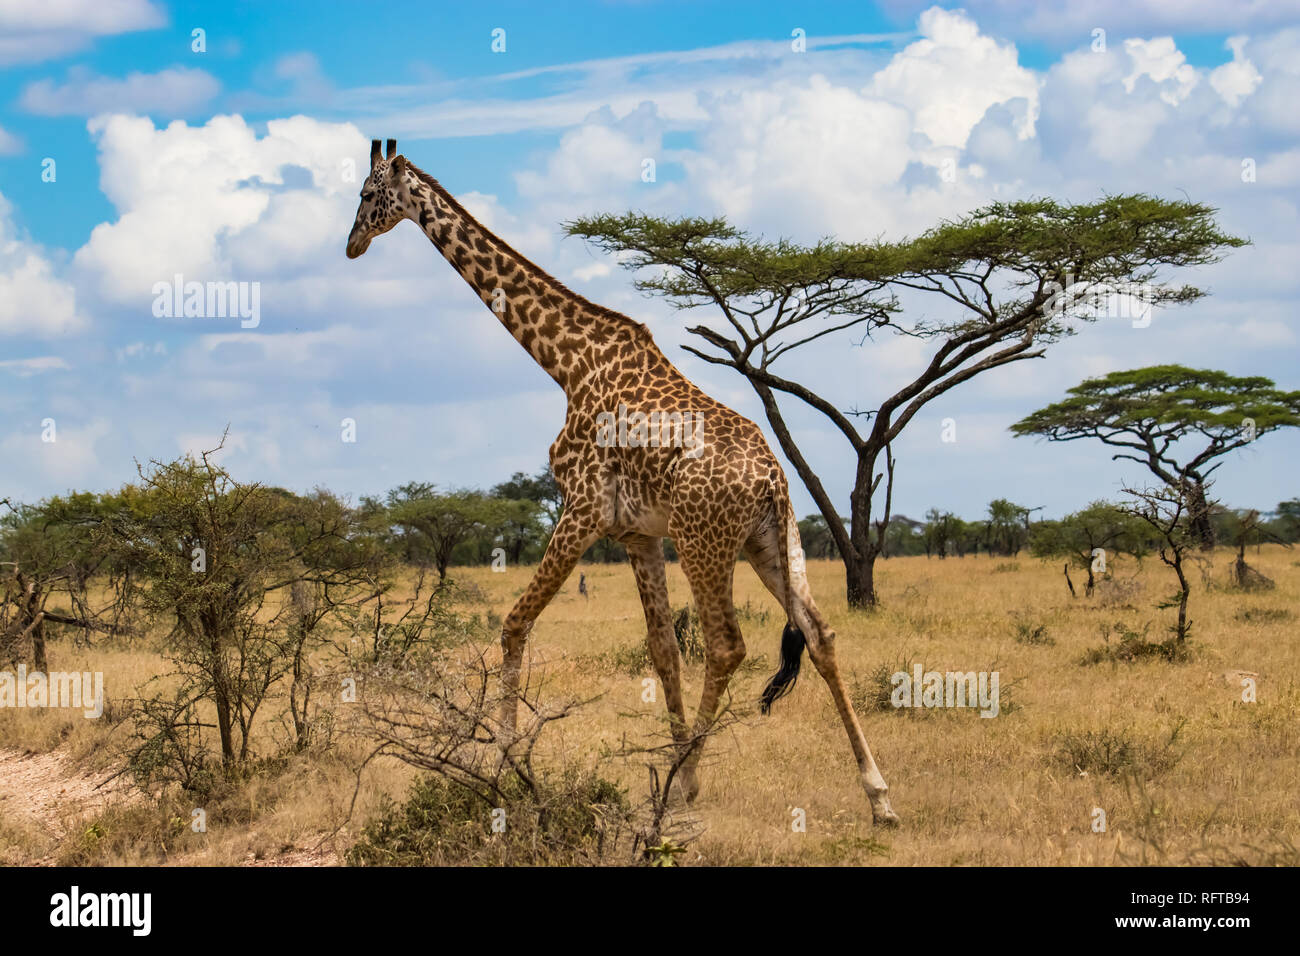 Giraffe walking African savanna Stock Photo